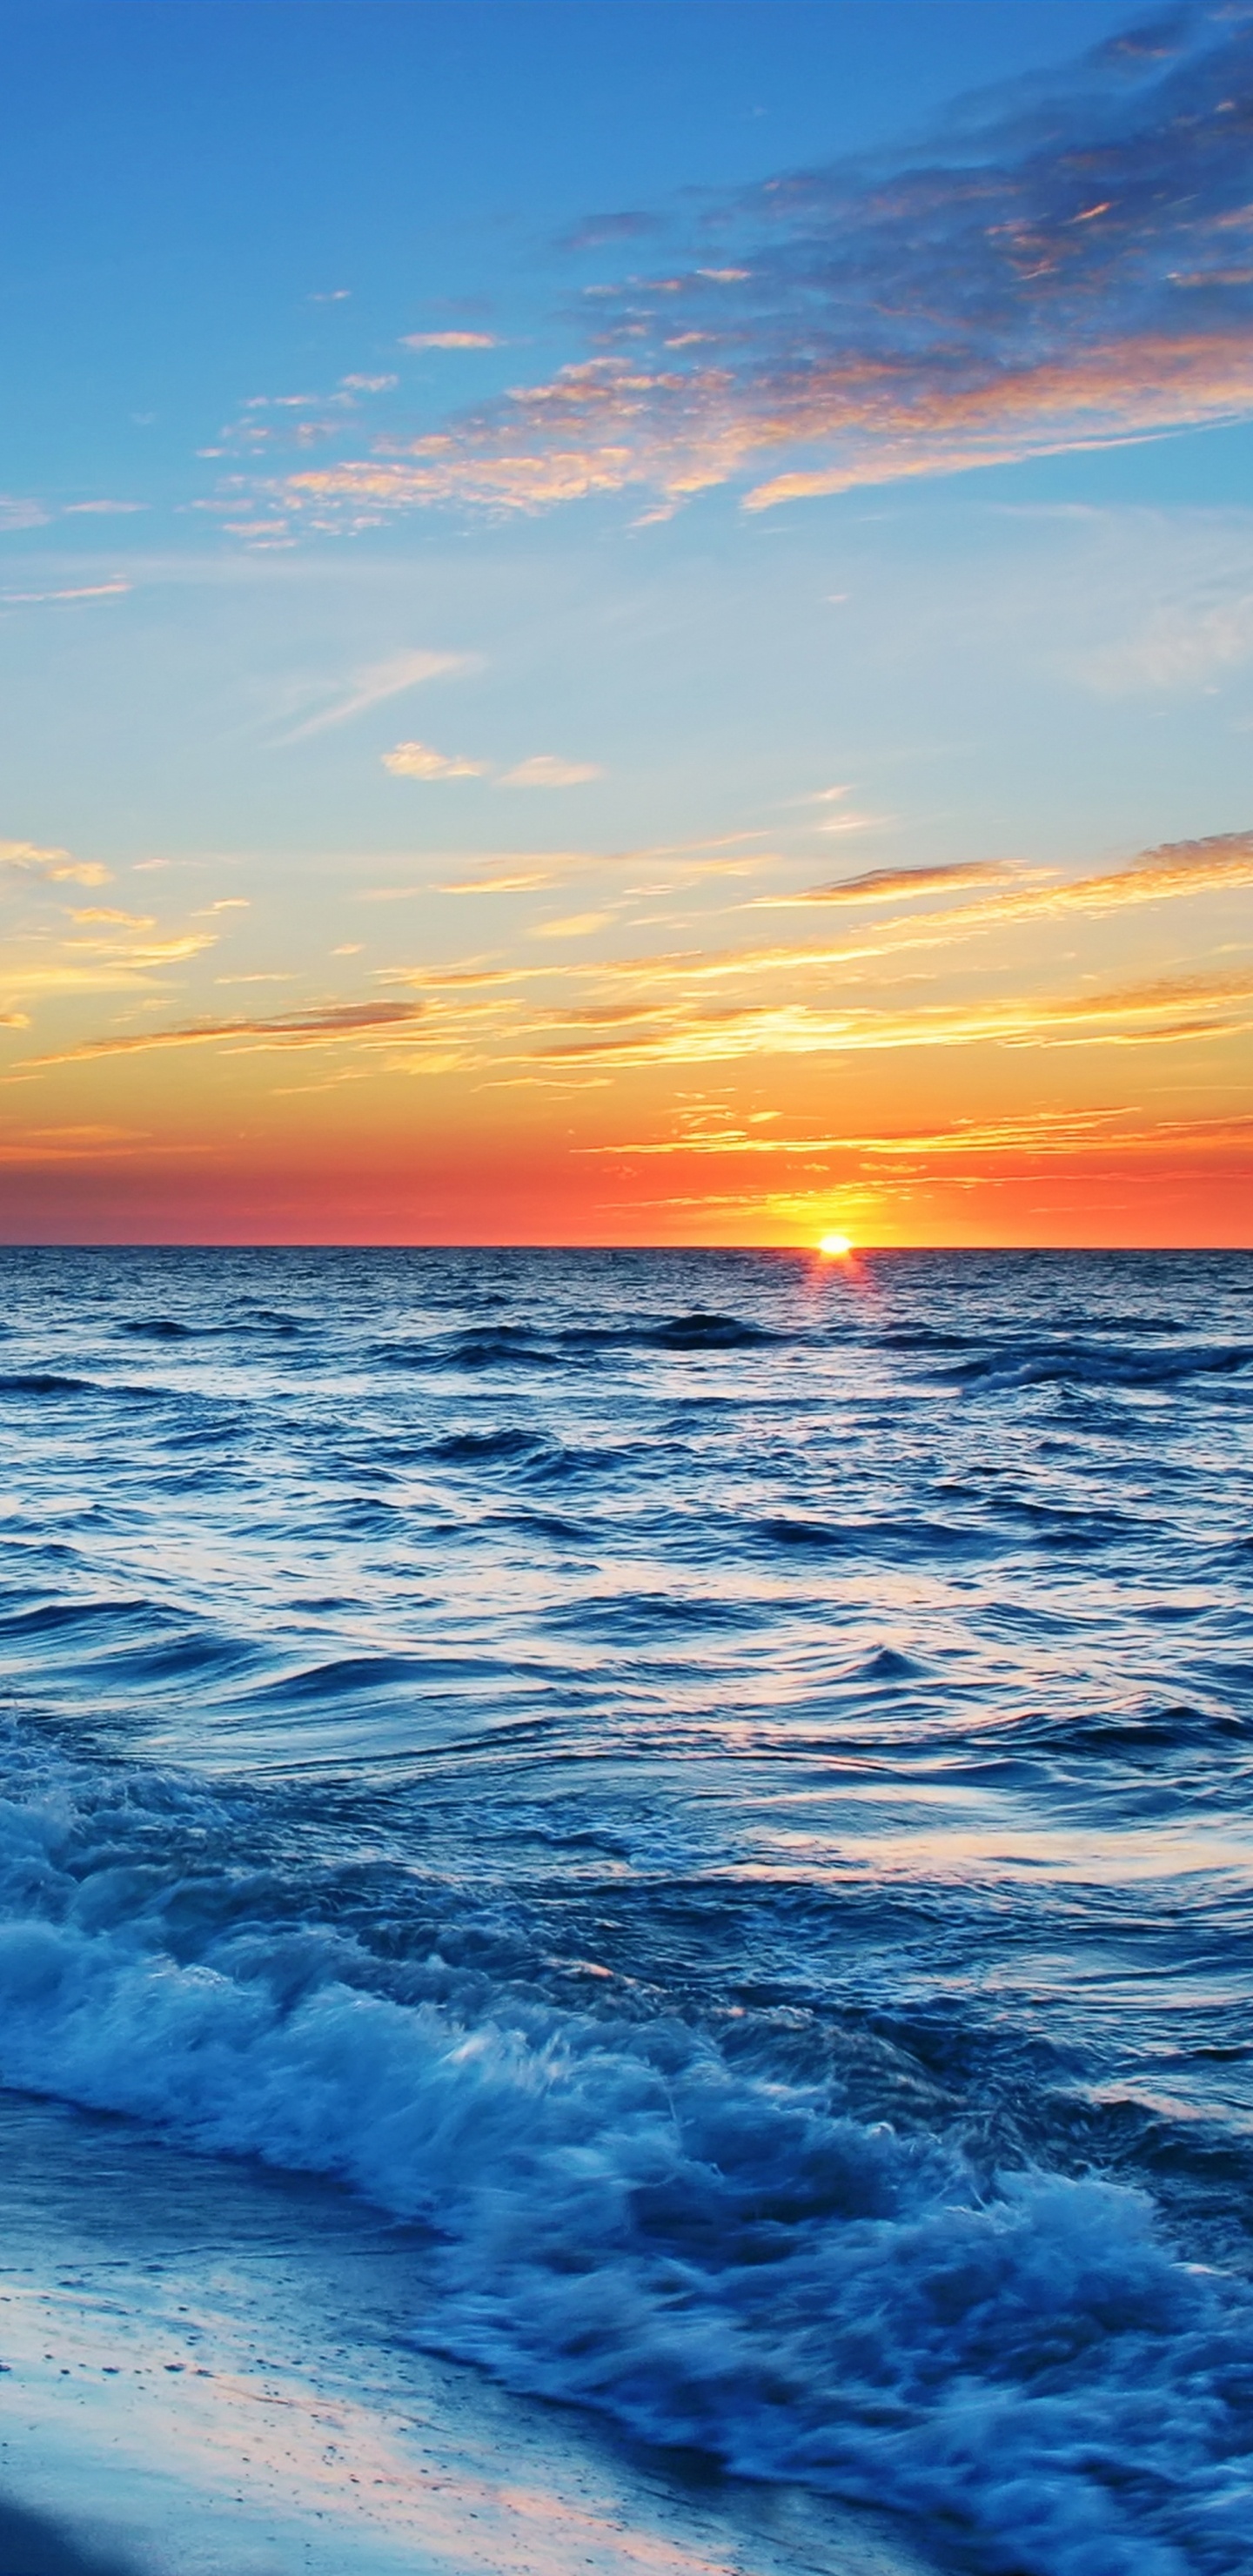 Ocean Waves Crashing on Shore During Sunset. Wallpaper in 1440x2960 Resolution